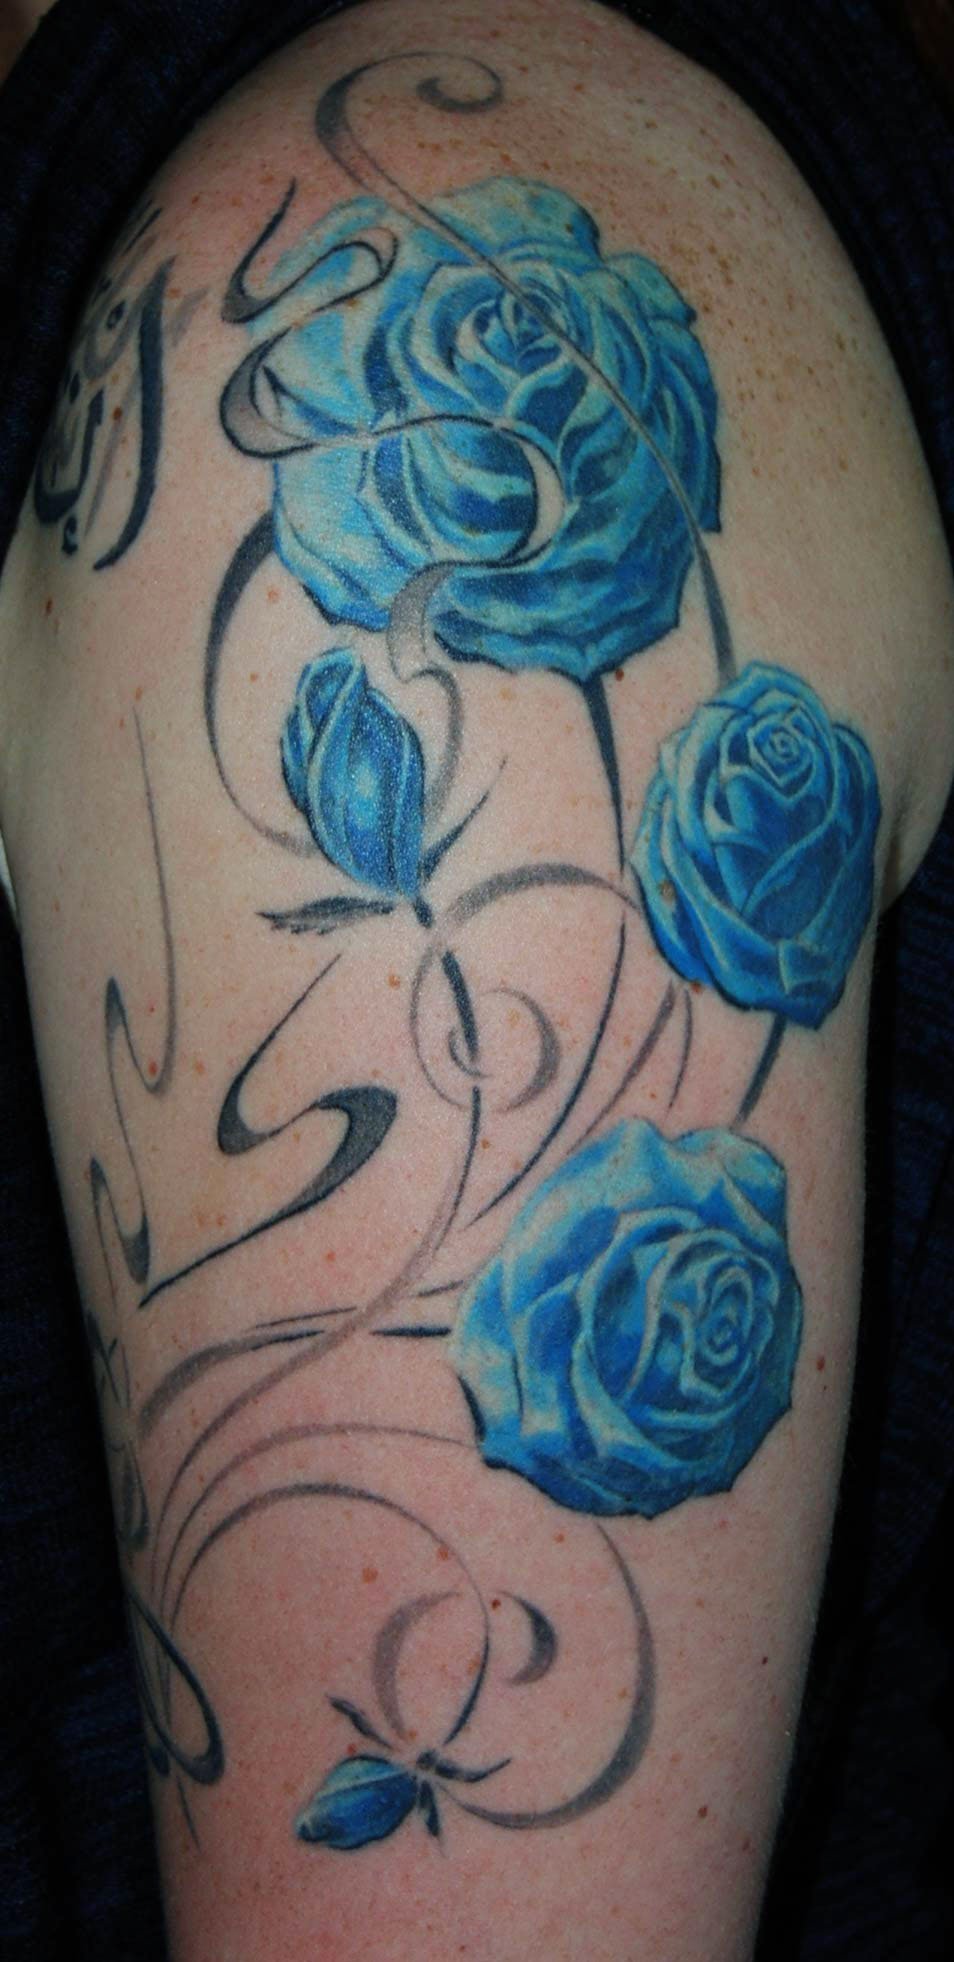 Rosen Tattoo in Blau mit Ornament in Grau München